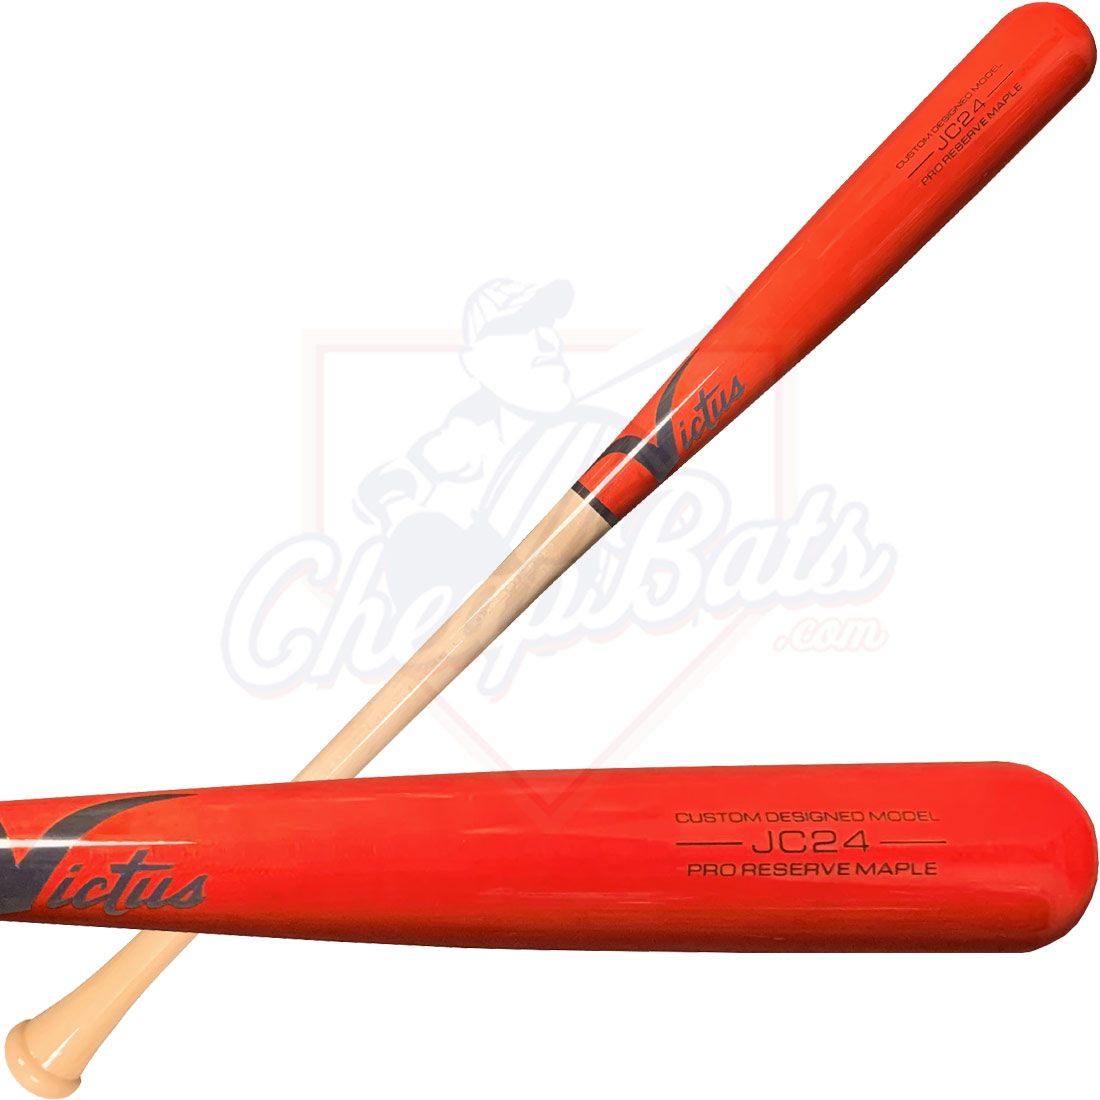 Victus JC24 Pro Reserve Maple Wood Baseball Bat VRWMJC24-DC